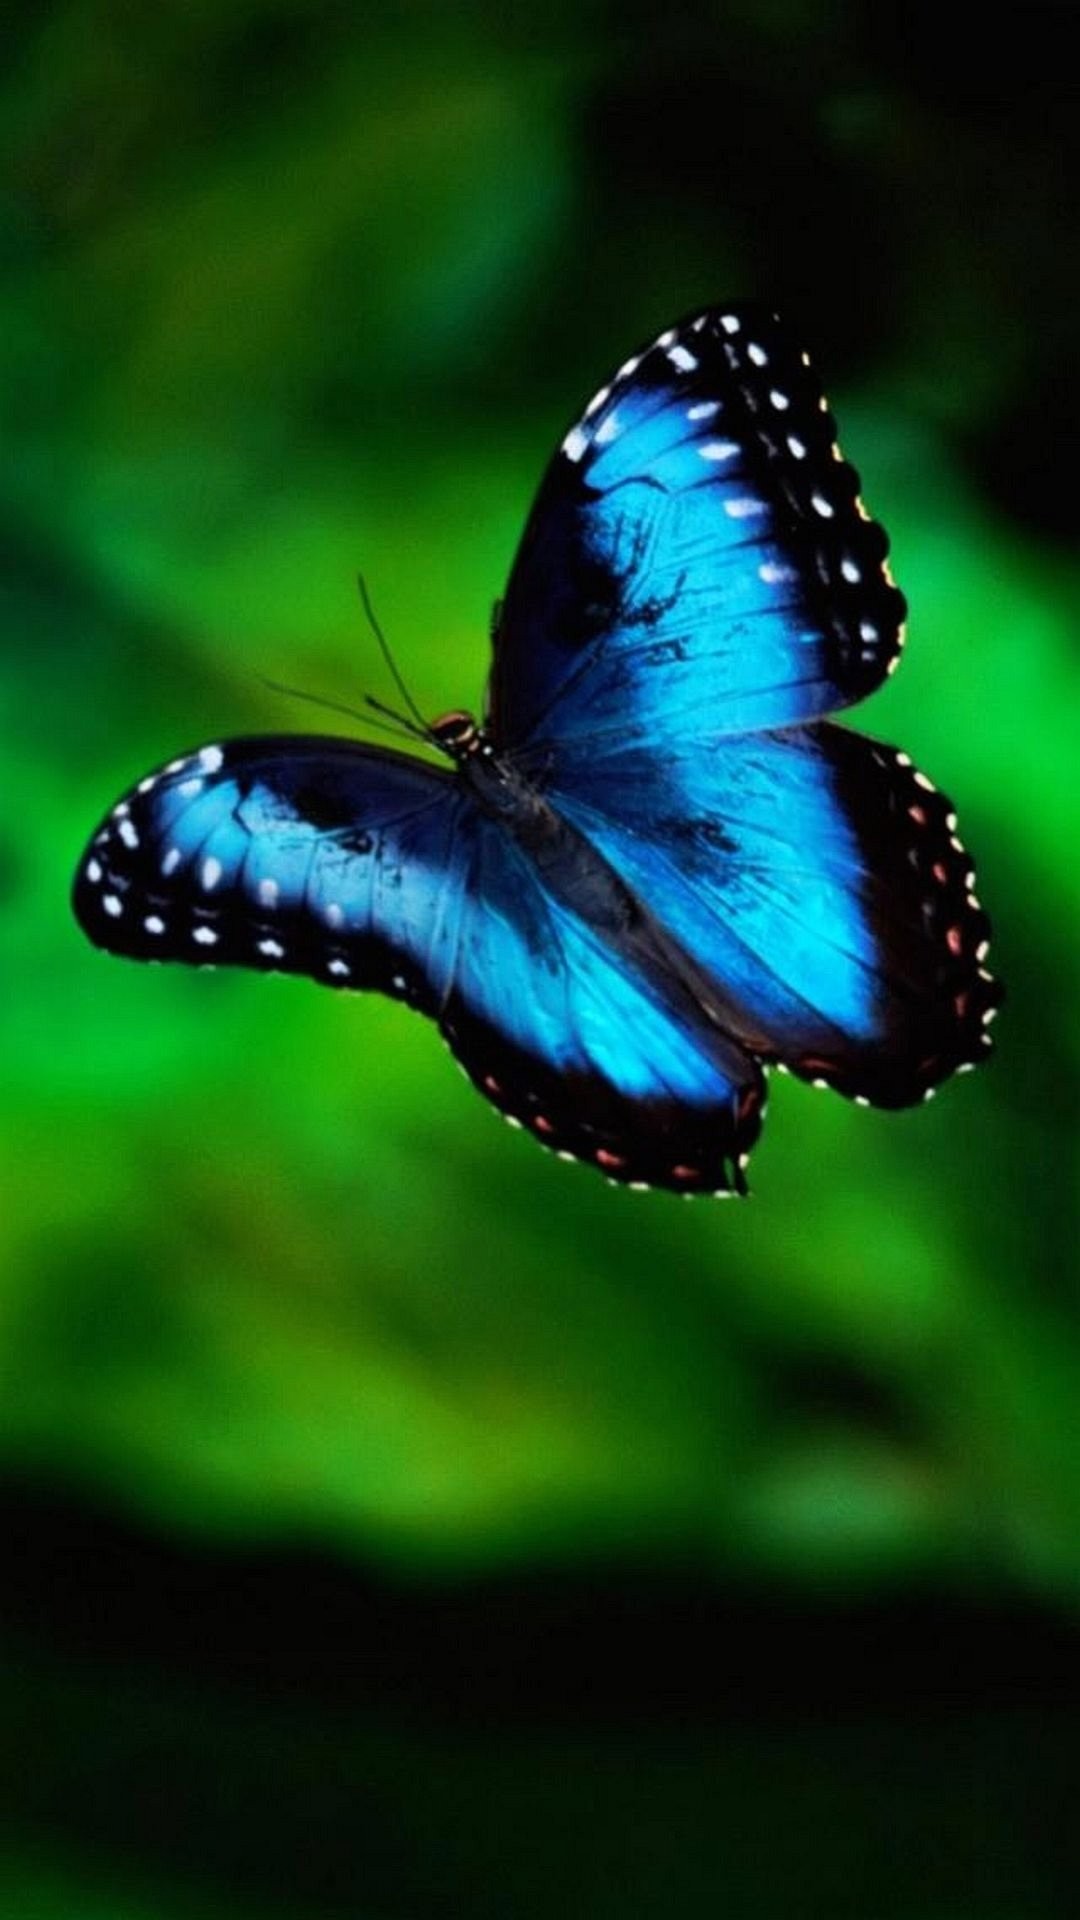 1080x1920 Wallpaper iphone 7 blue butterfly 1080 1920 full hd 50